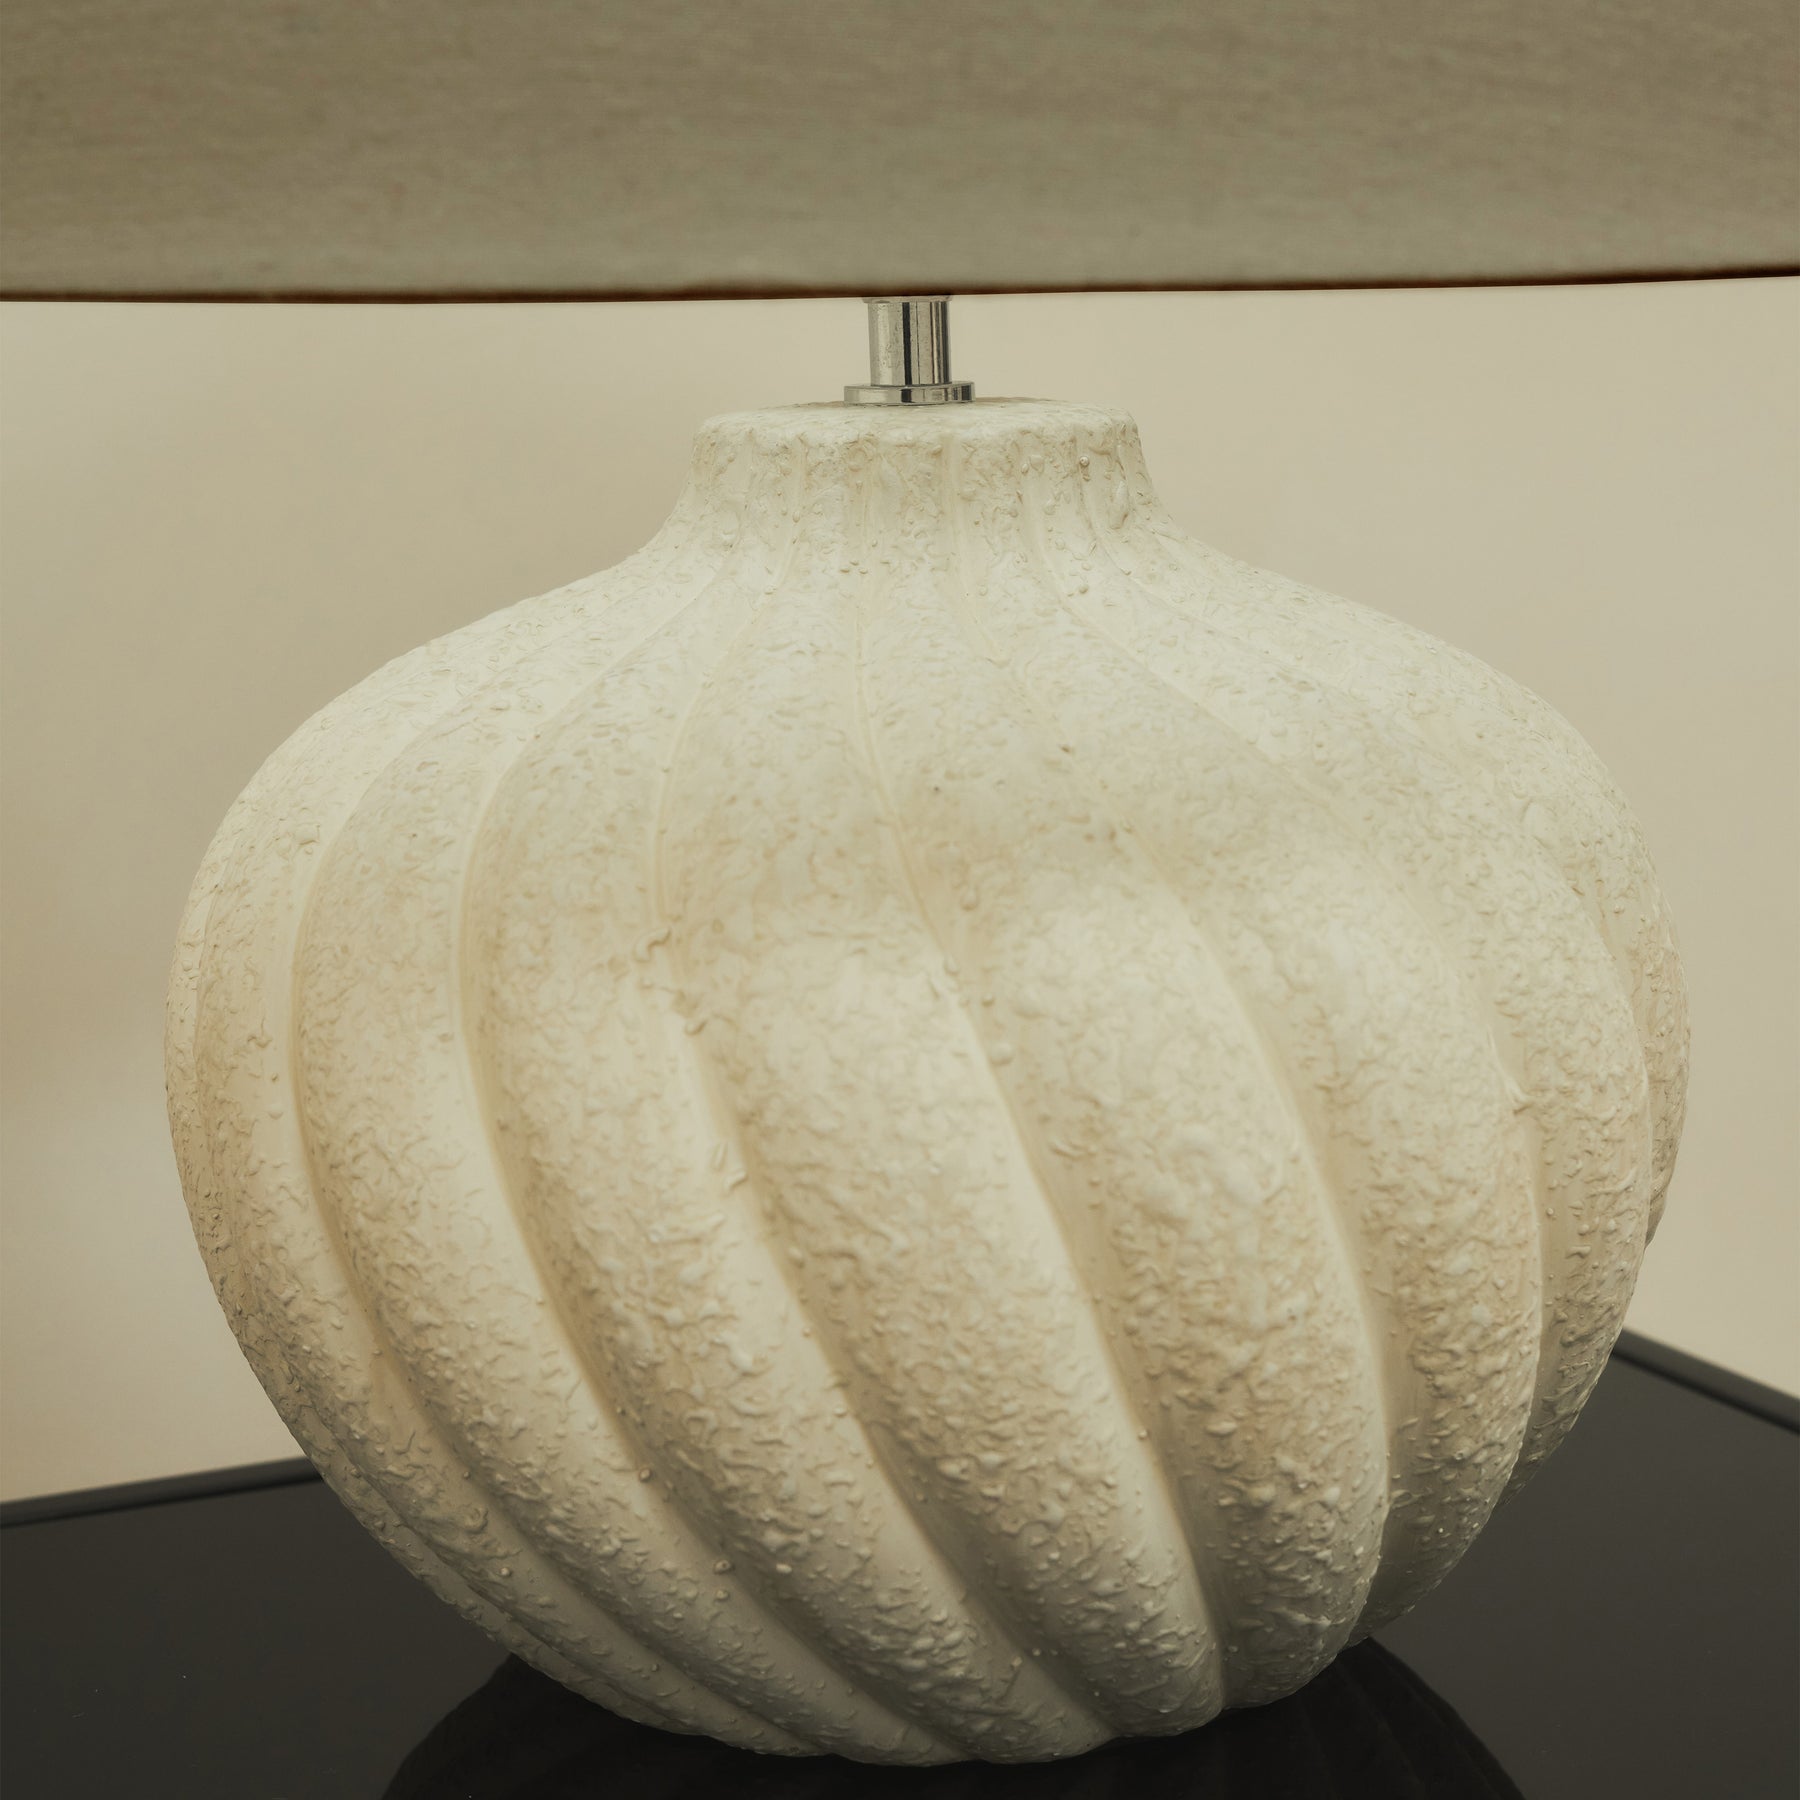 Textured ceramic based table lamp beige shade detail shot